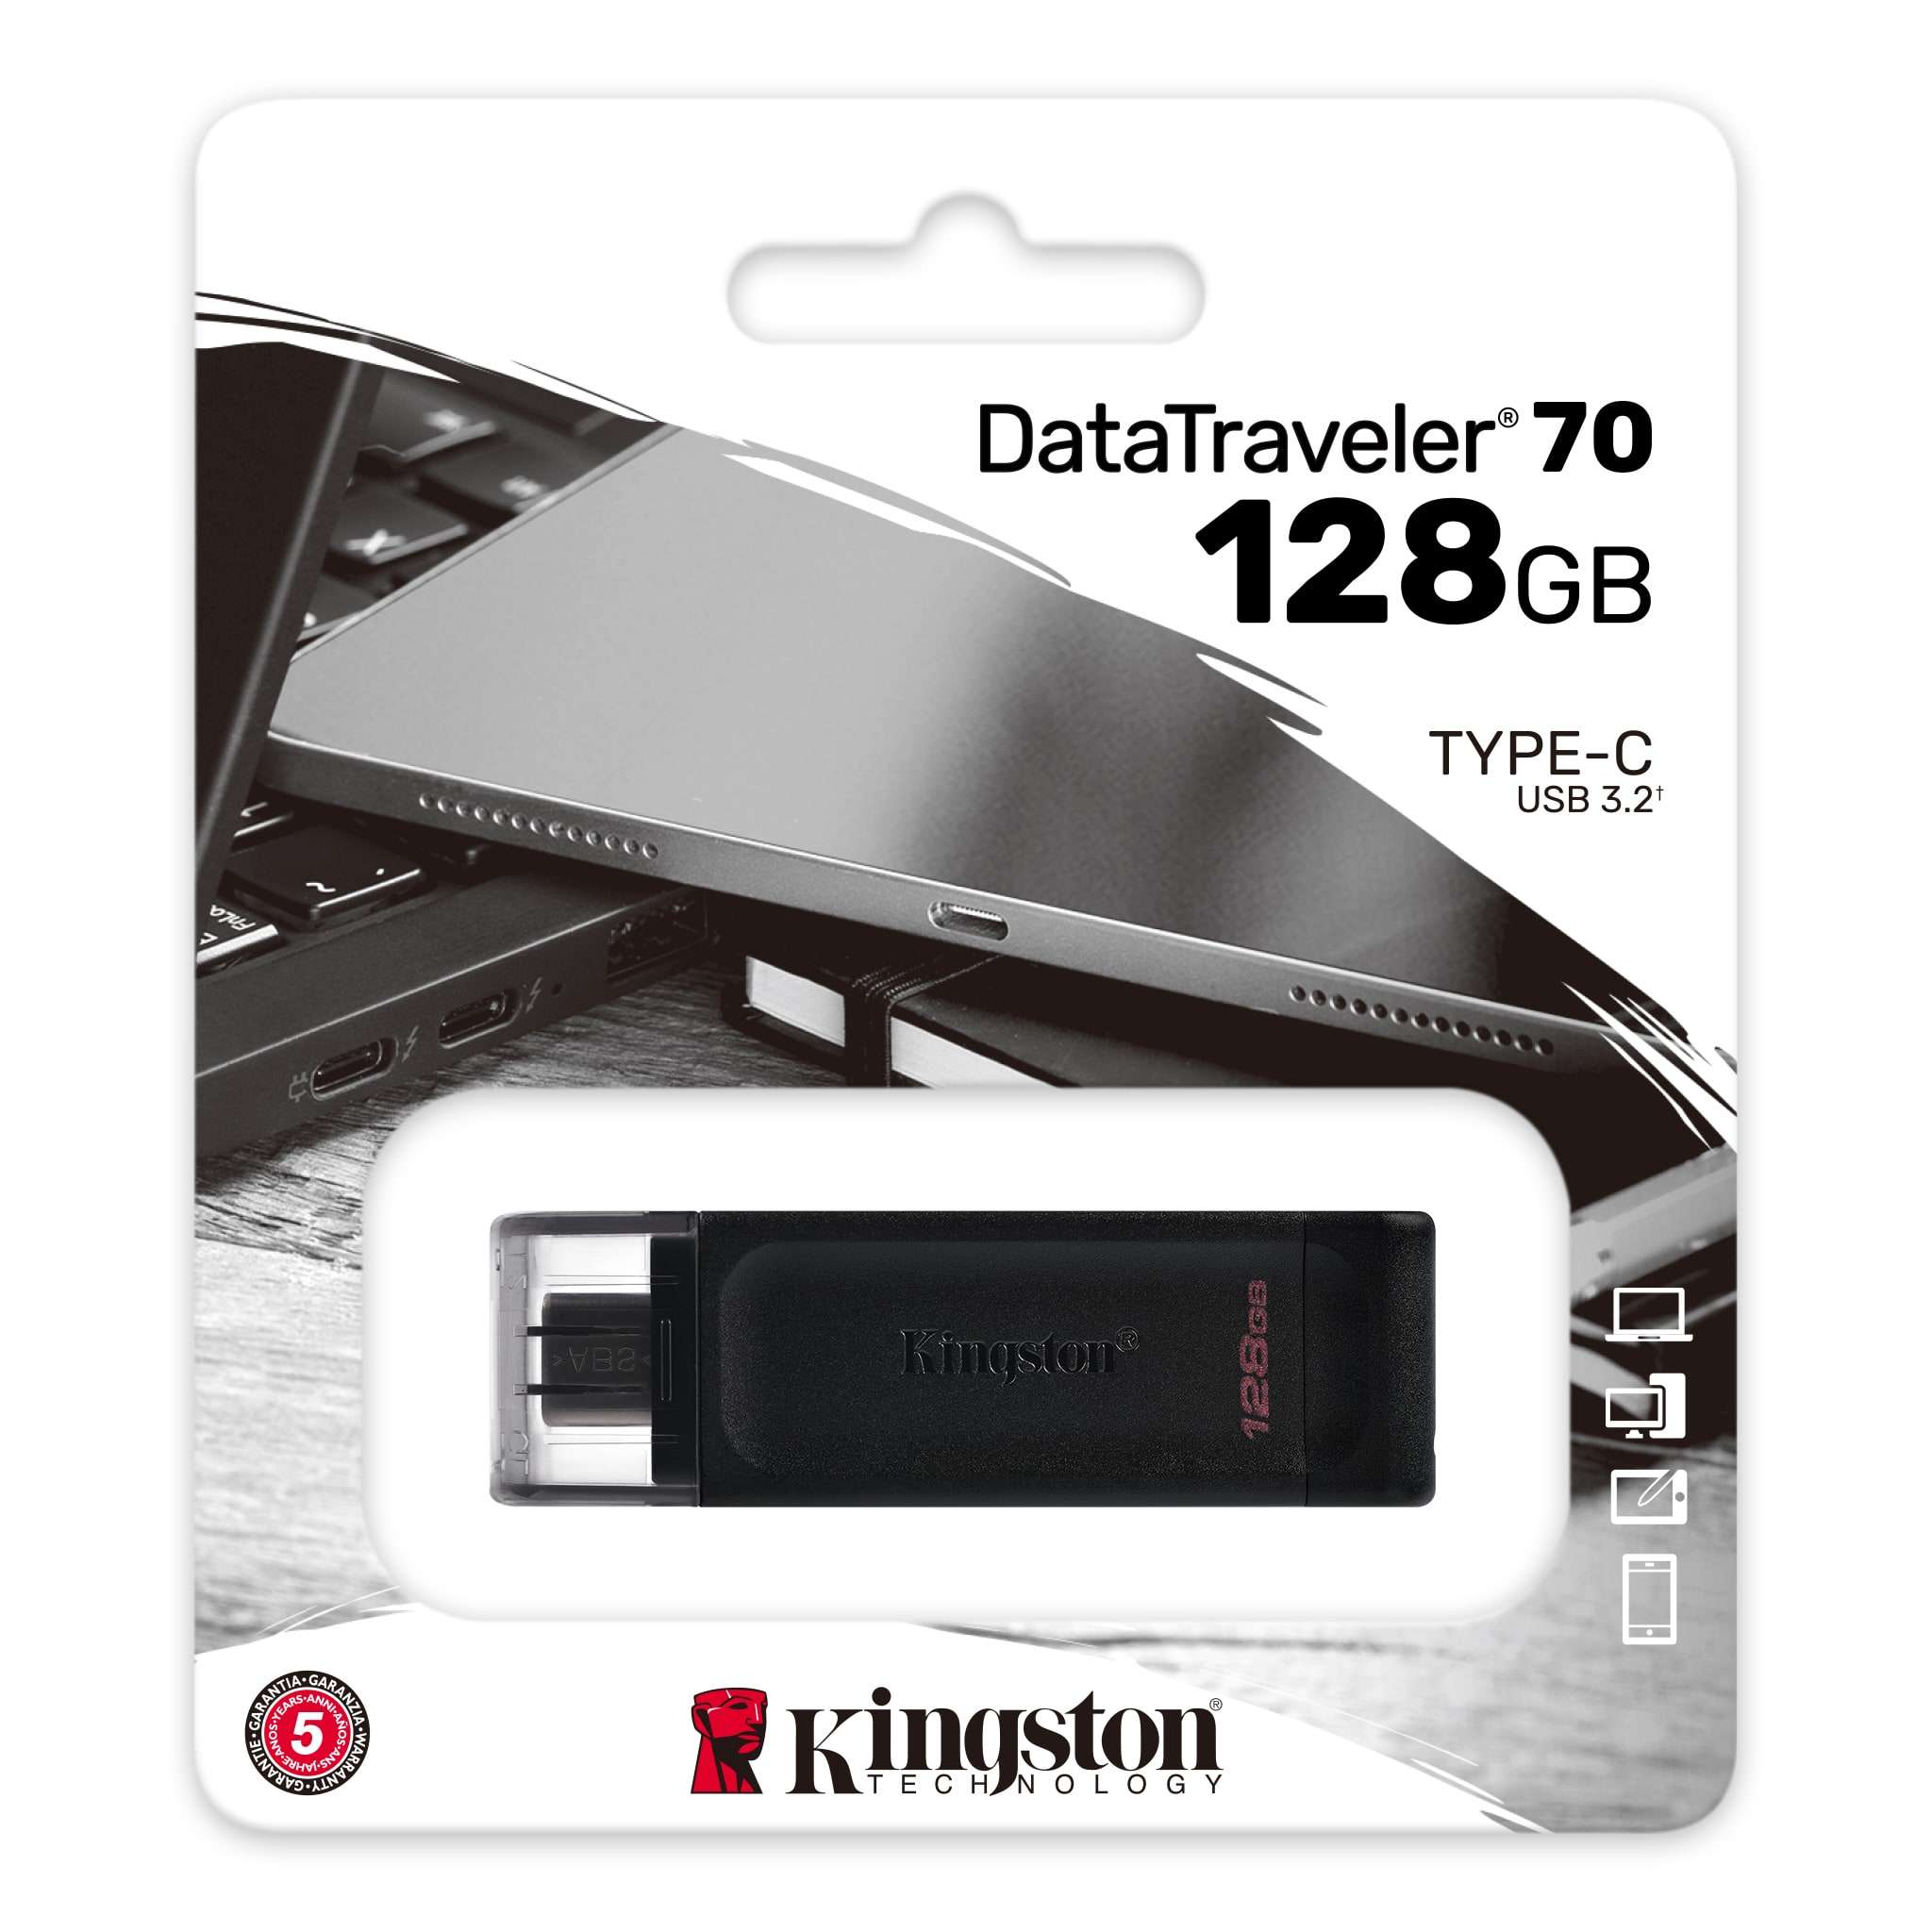 DataTraveler 70 USB-C Flash Drive – 32GB – - Kingston Technology